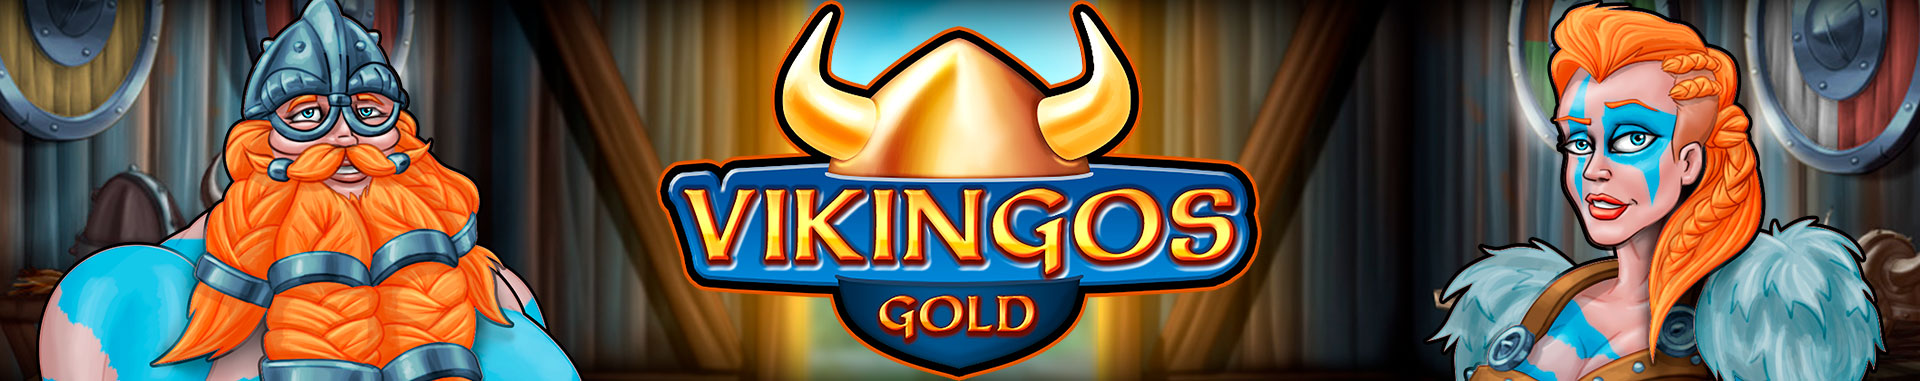 Tragaperras Online Vikingos Gold